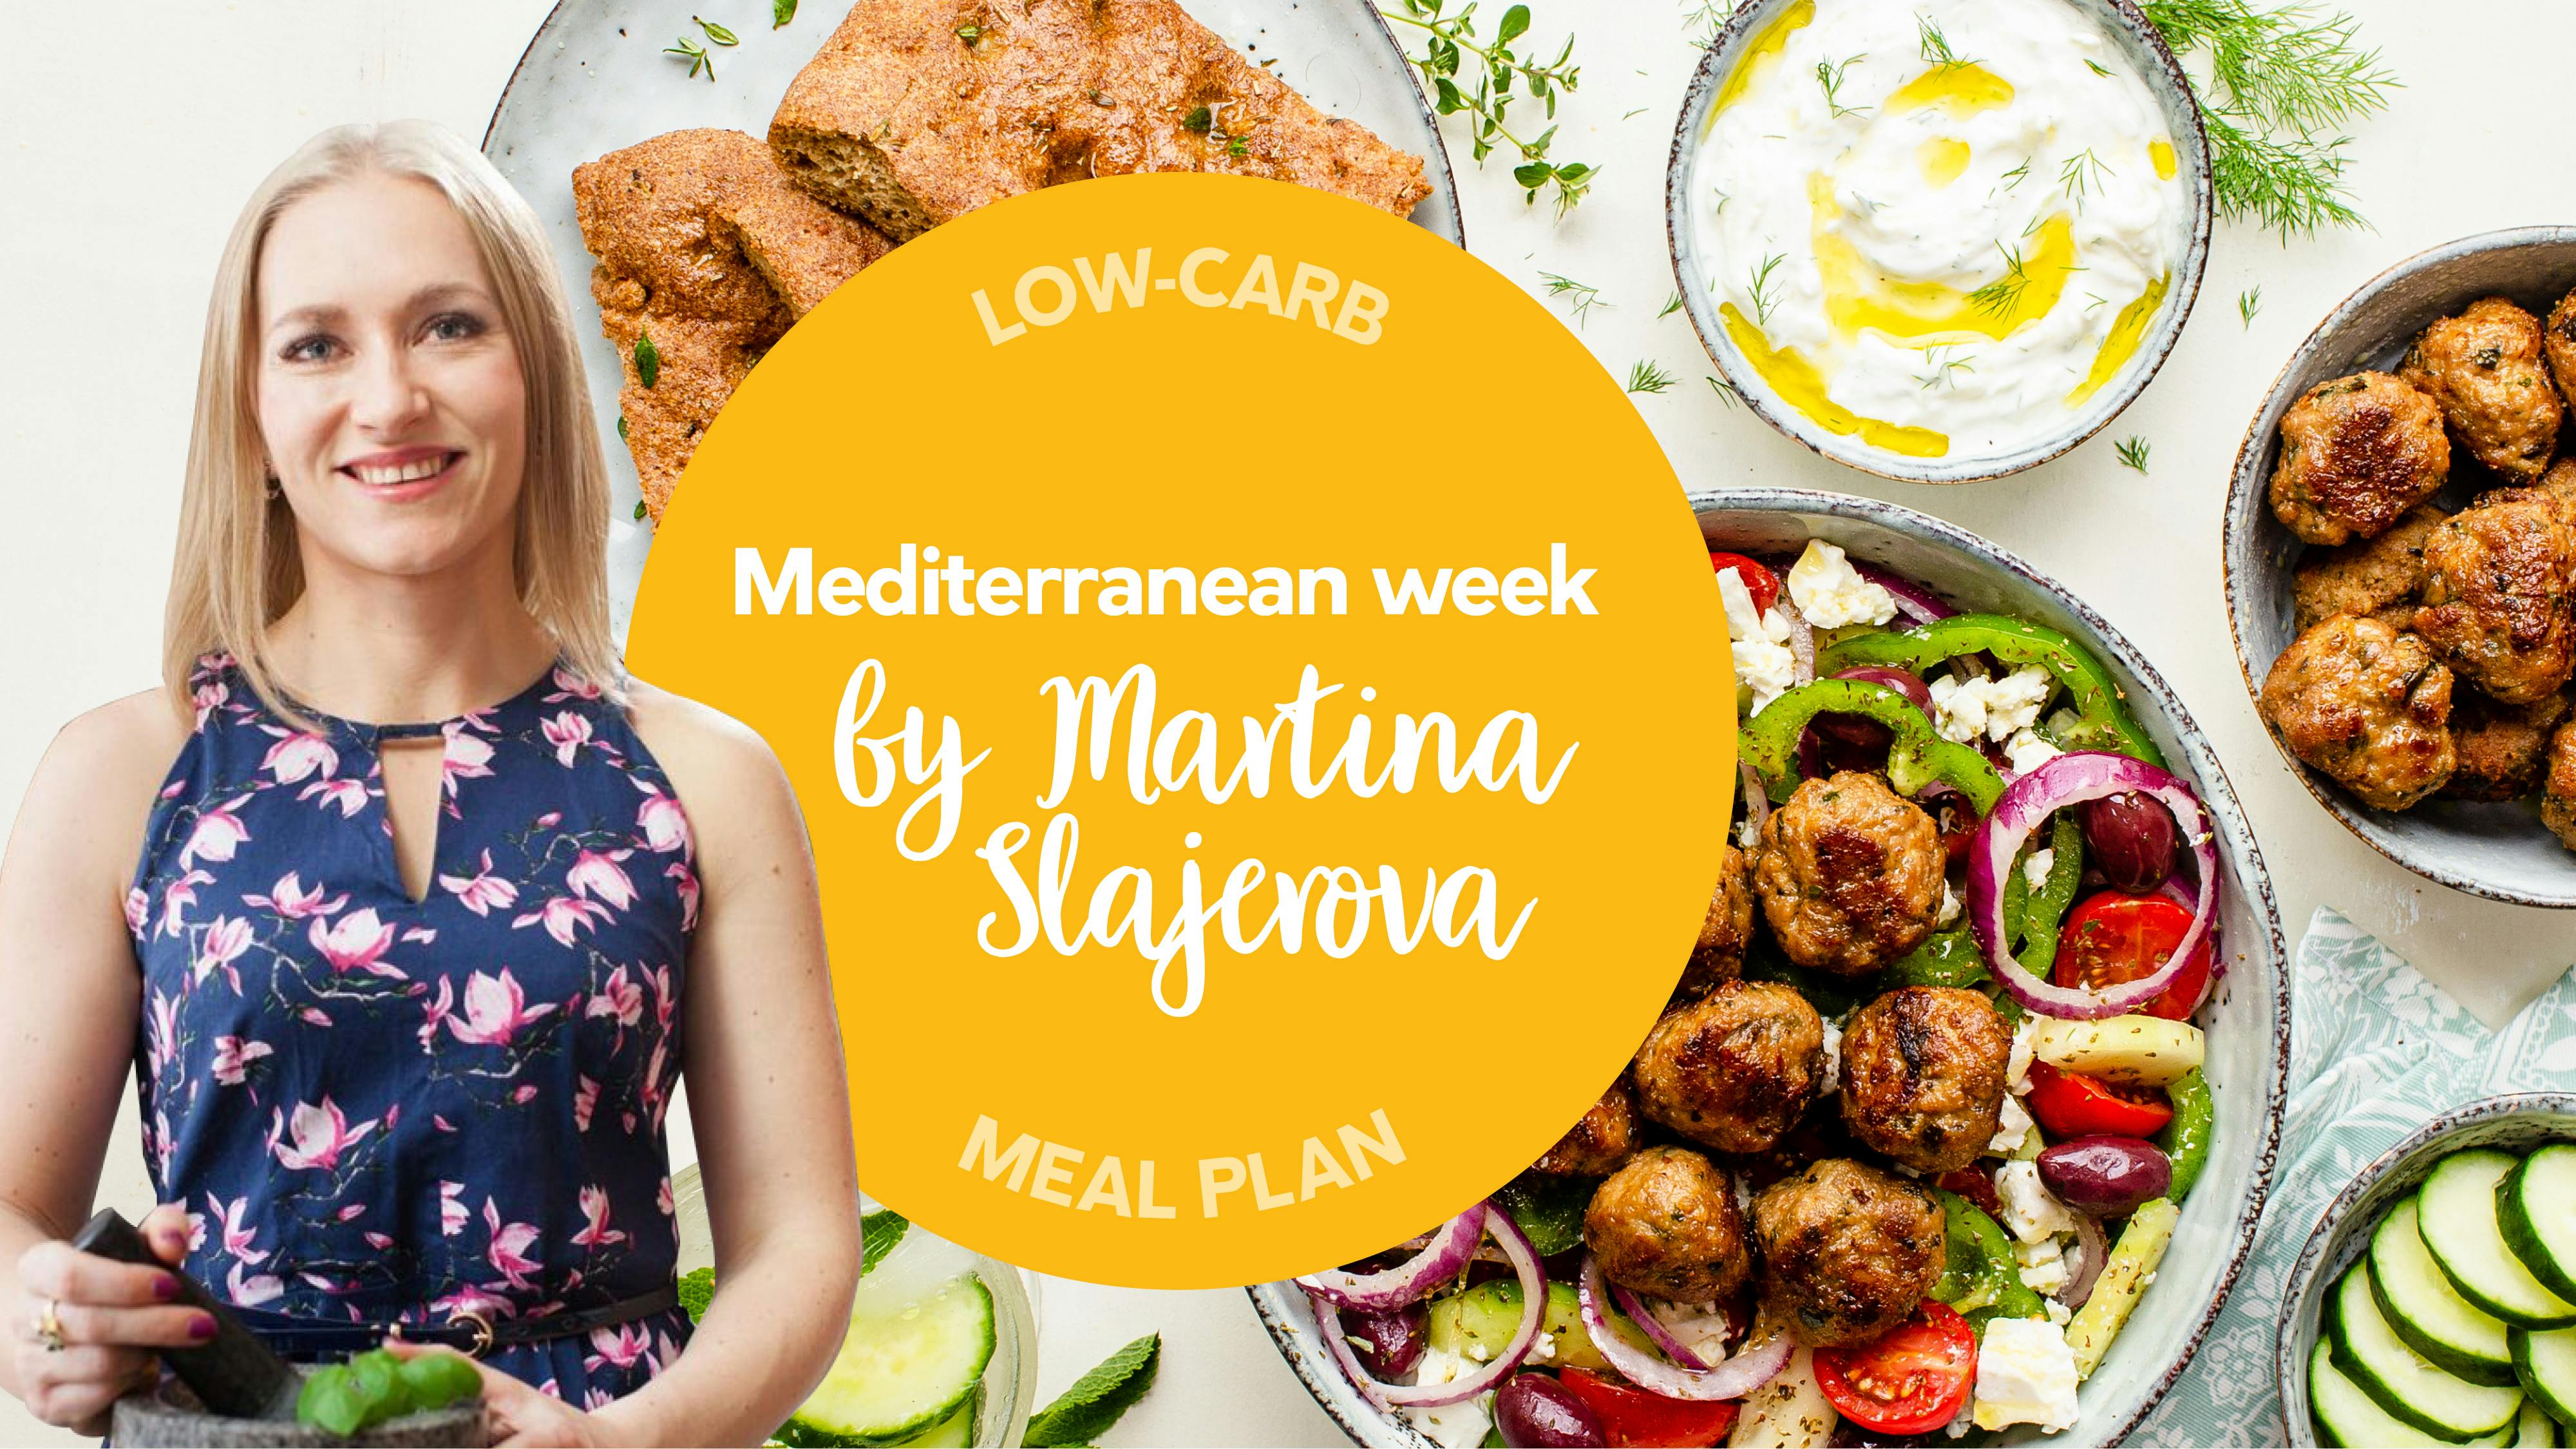 Mediterranean_week_with_Martina_Slajerova_16x9